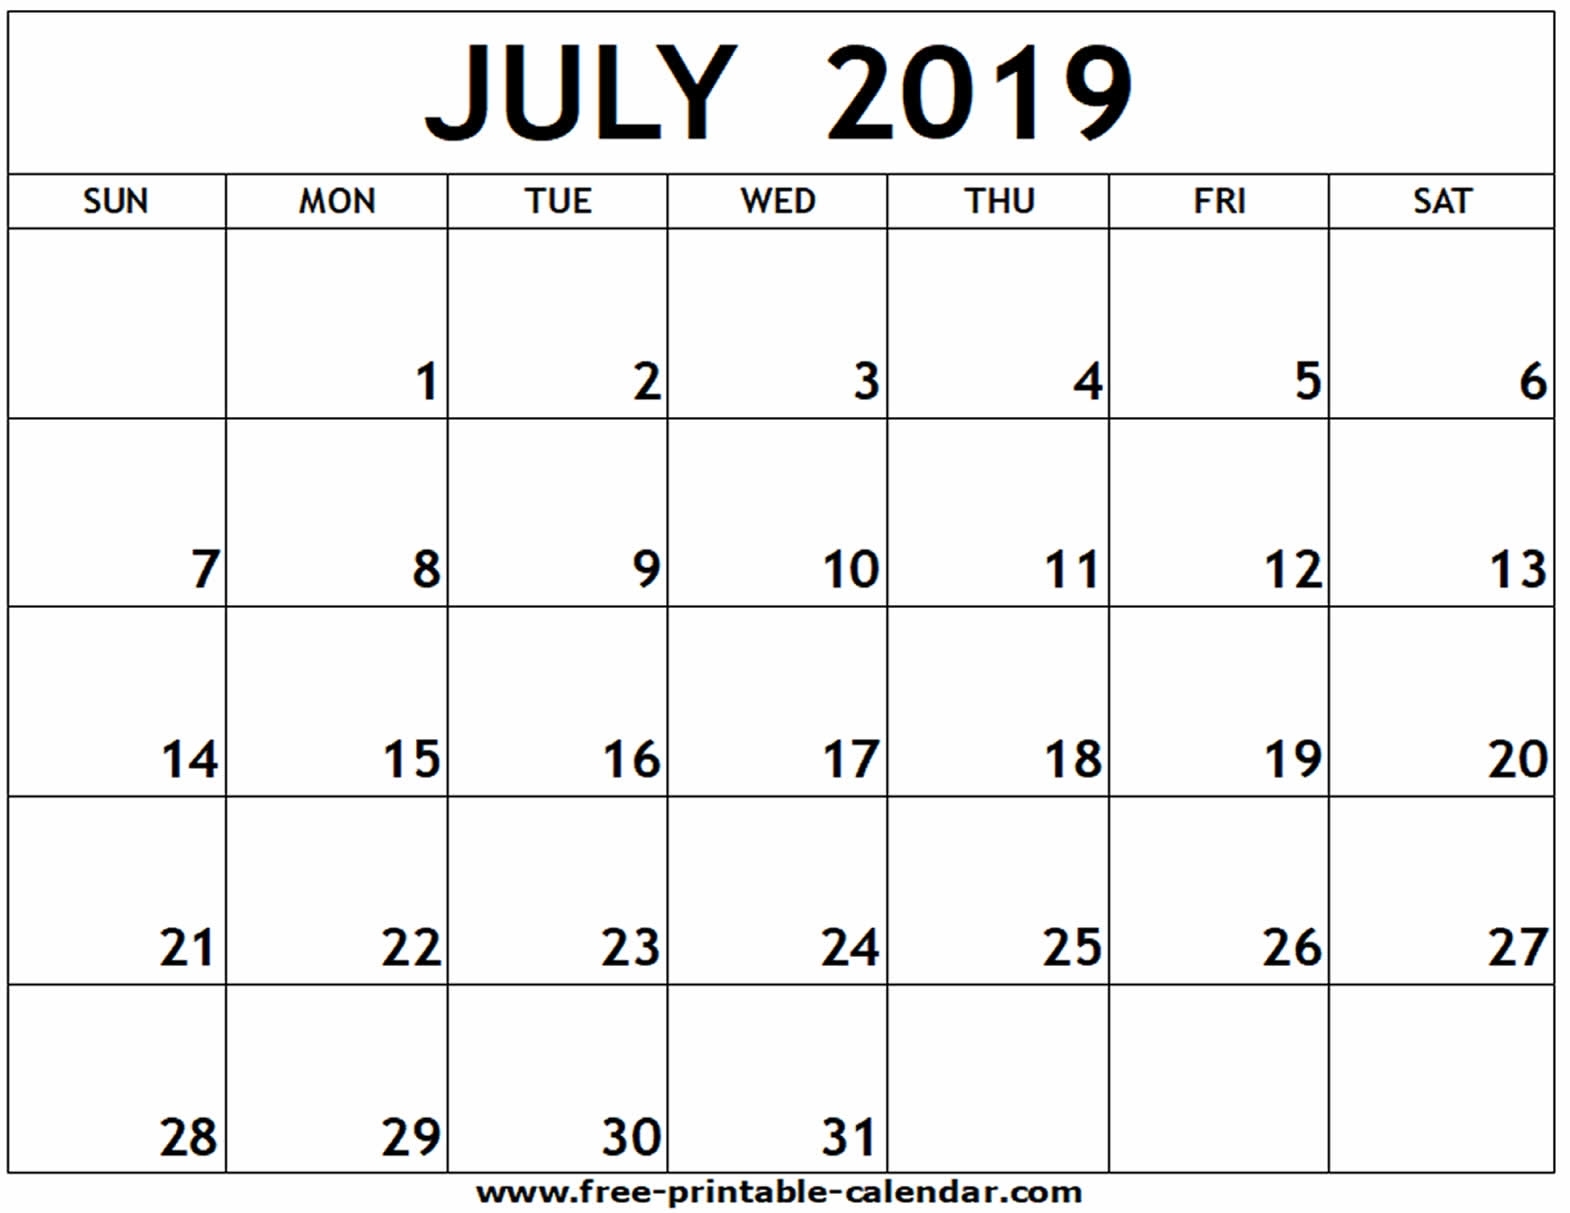 July 2019 Printable Calendar - Free-Printable-Calendar pertaining to June And July Printable Calendars